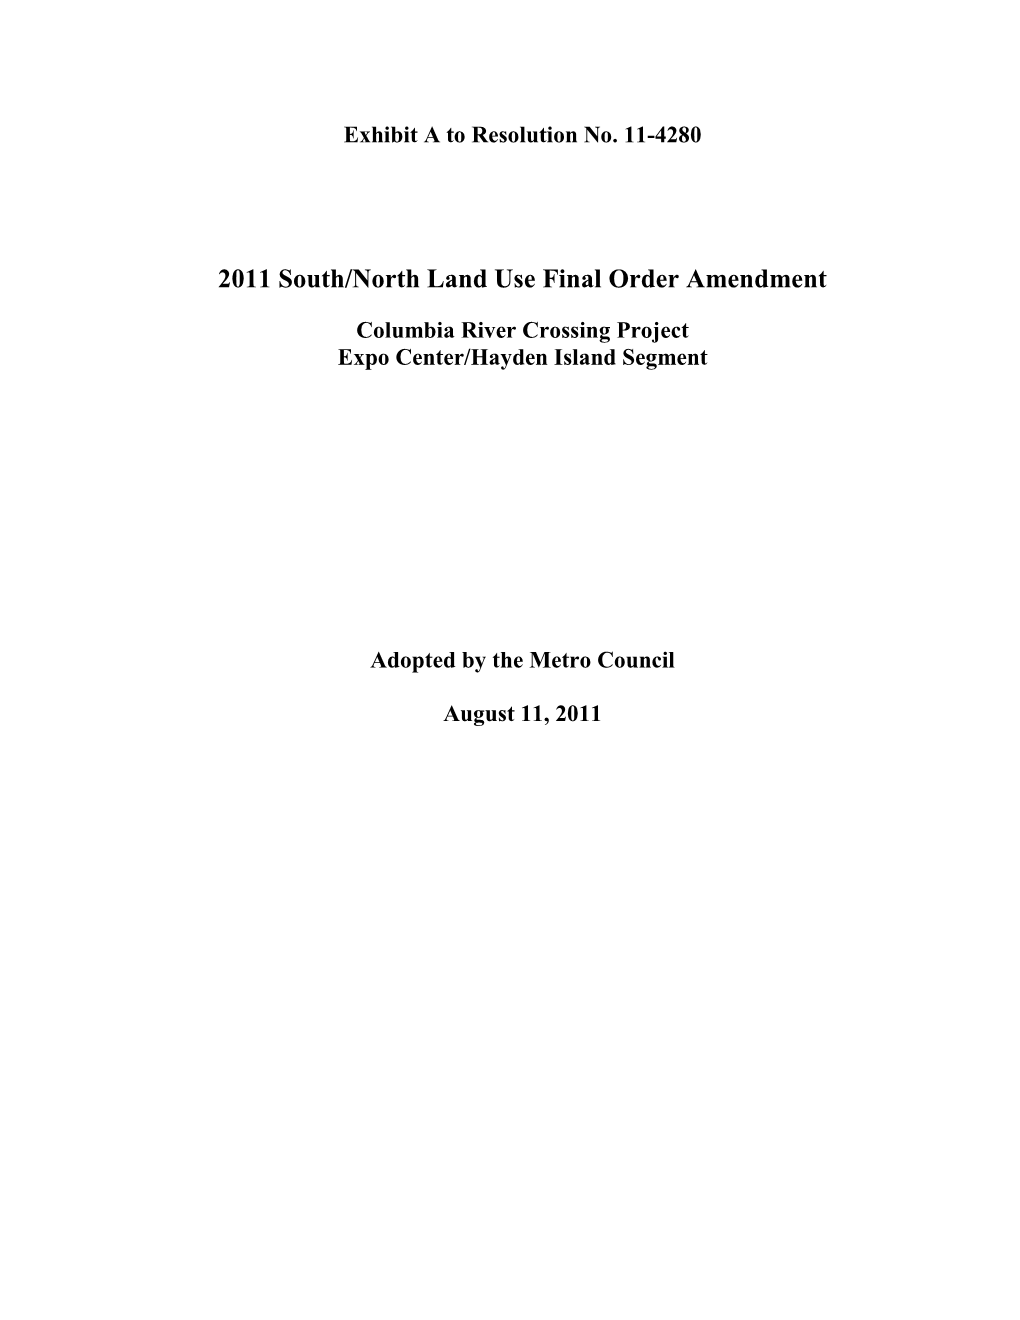 2011 South/North Land Use Final Order Amendment